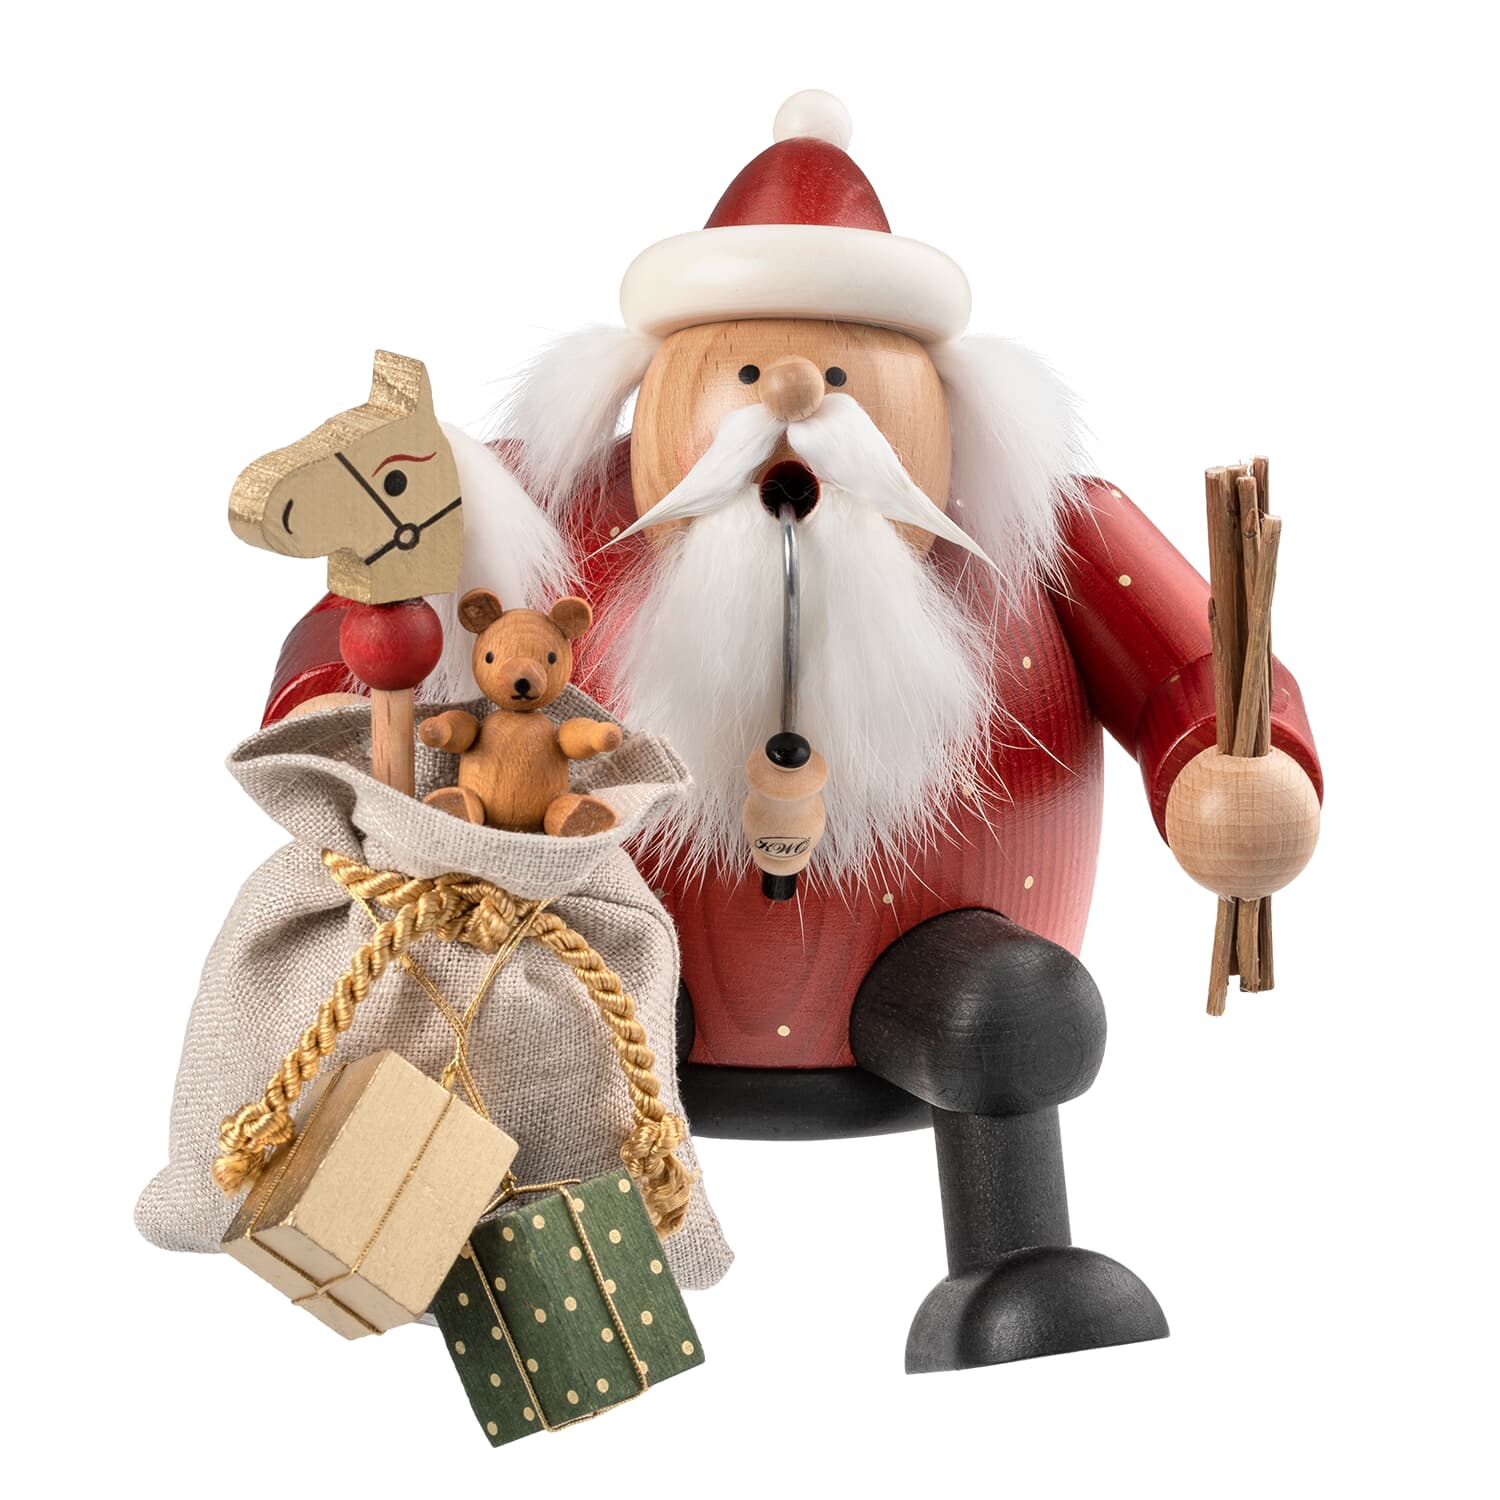 KWO Santa Claus with gift sack, Incense Smoker